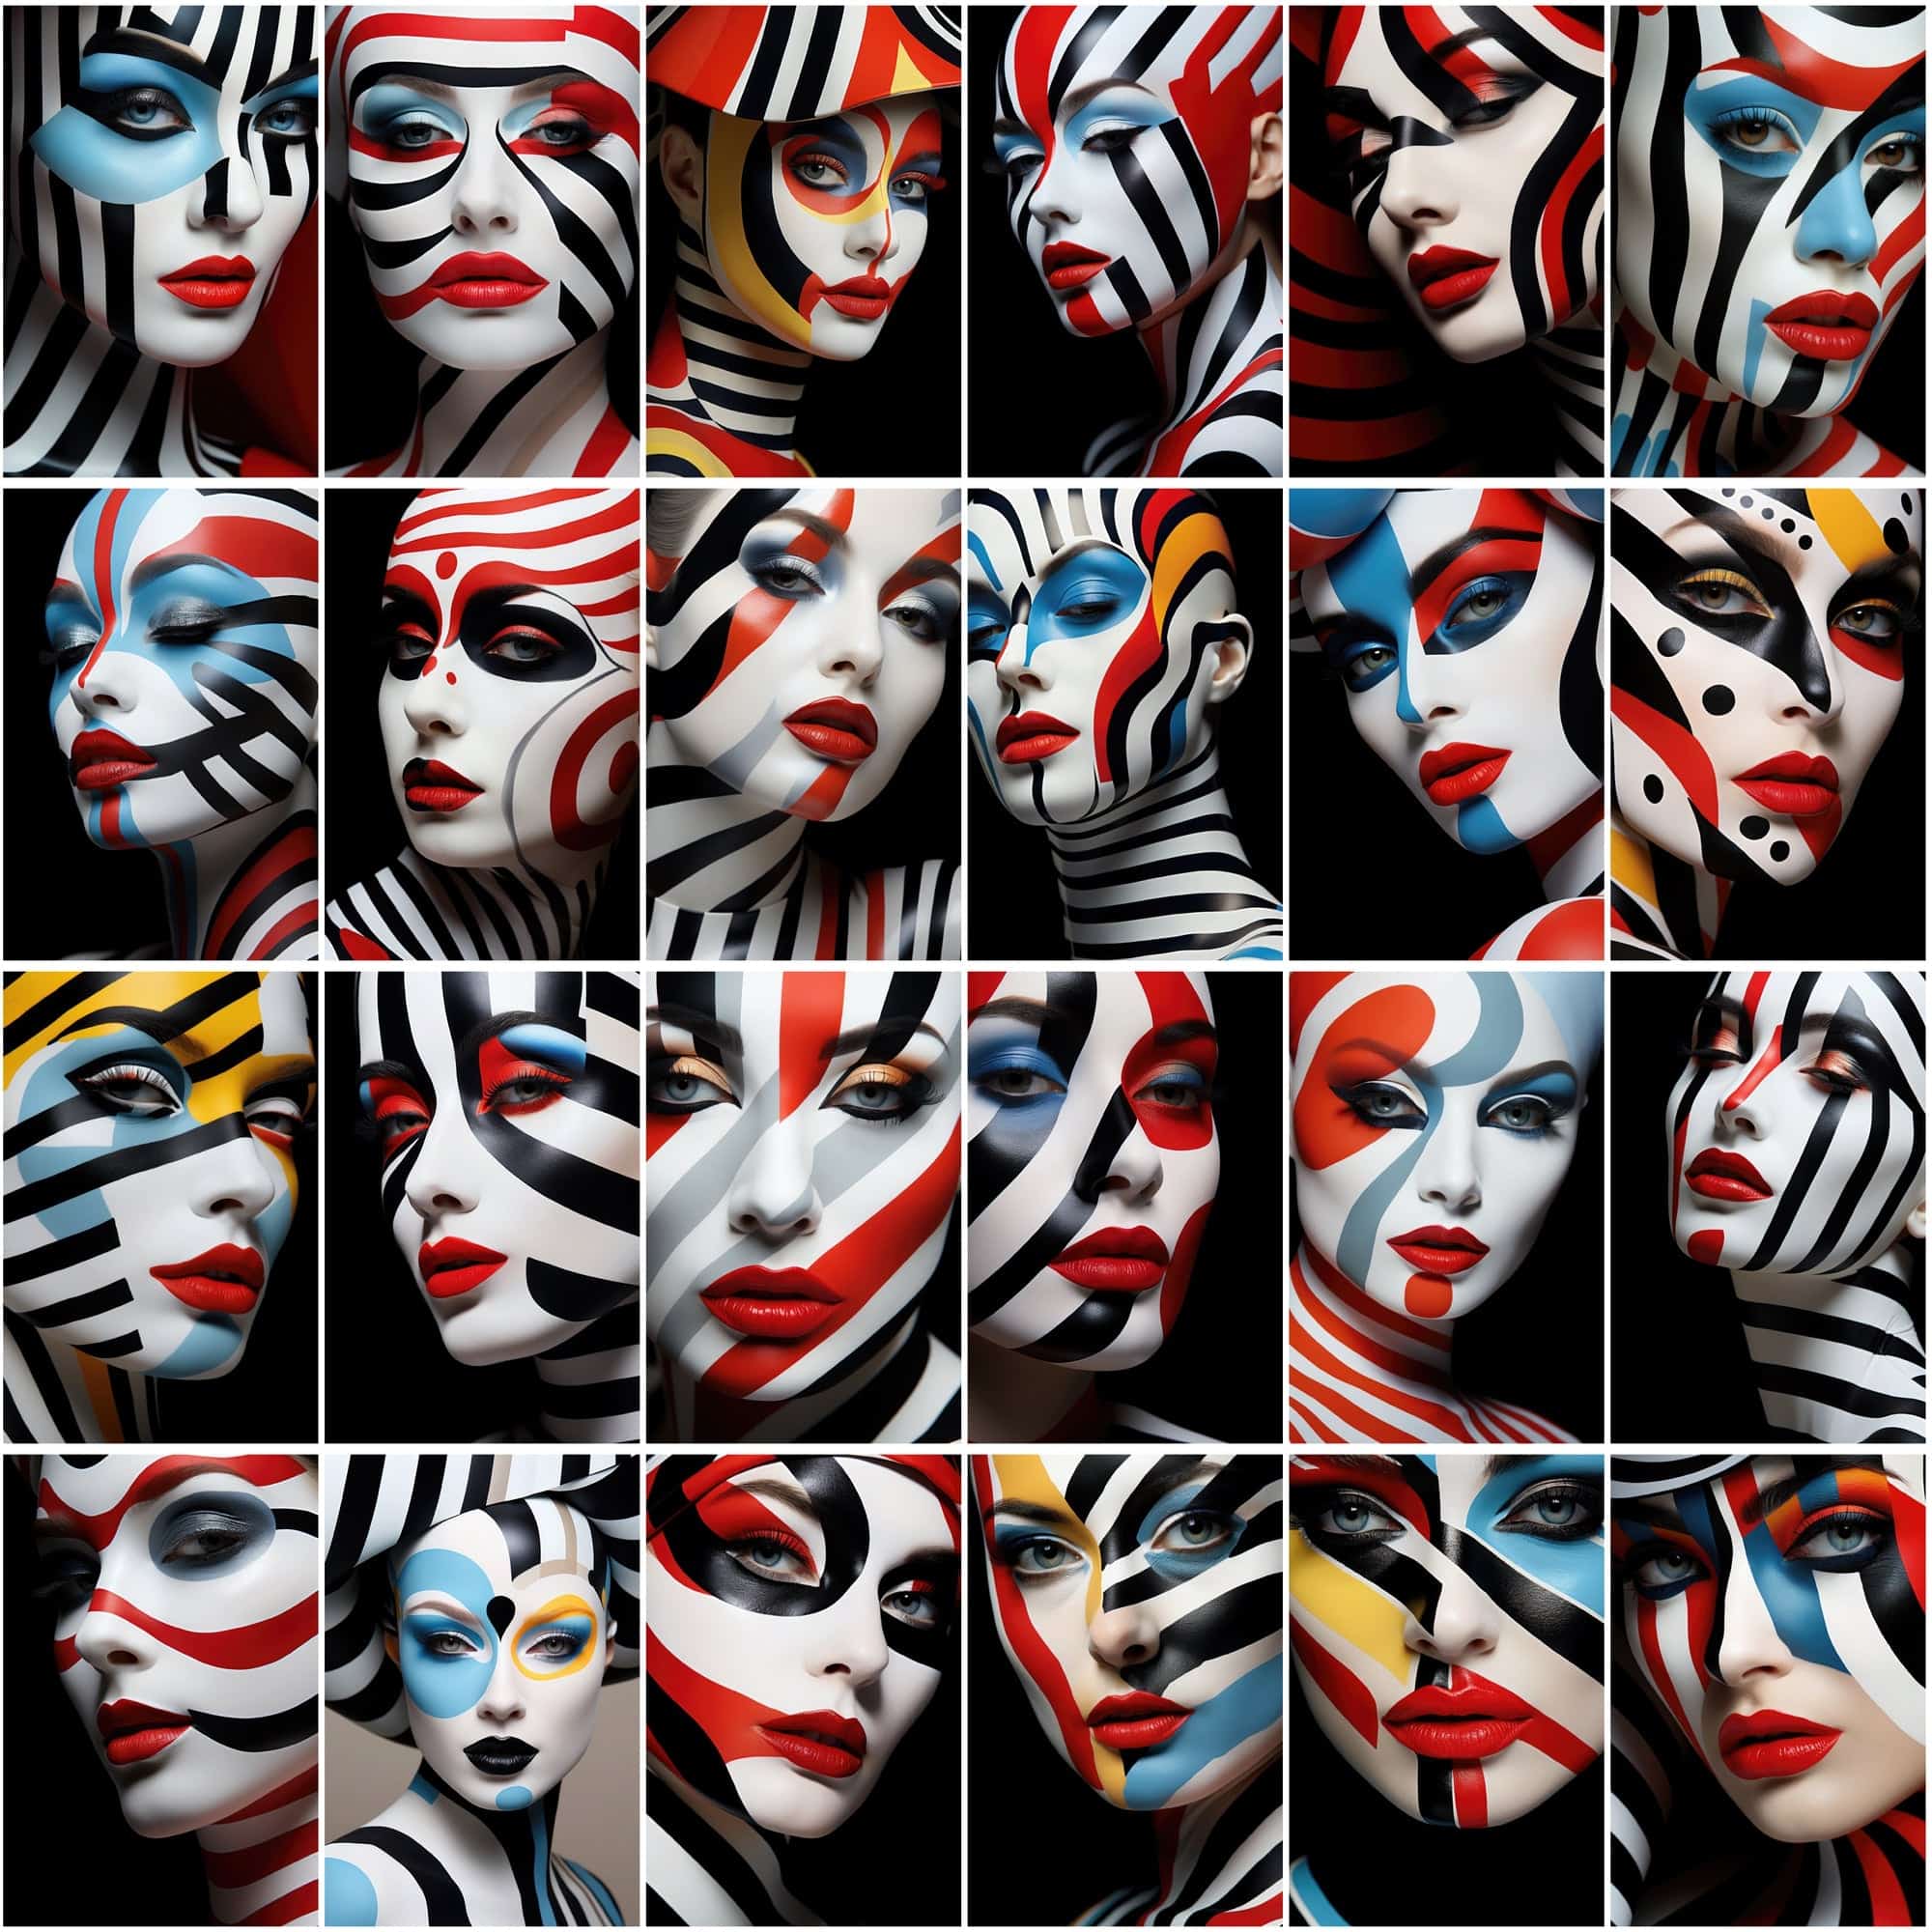 200 Artistic Portraits Bundle - Striking Illusion, Dramatic Makeup, Commercial License Digital Download Sumobundle